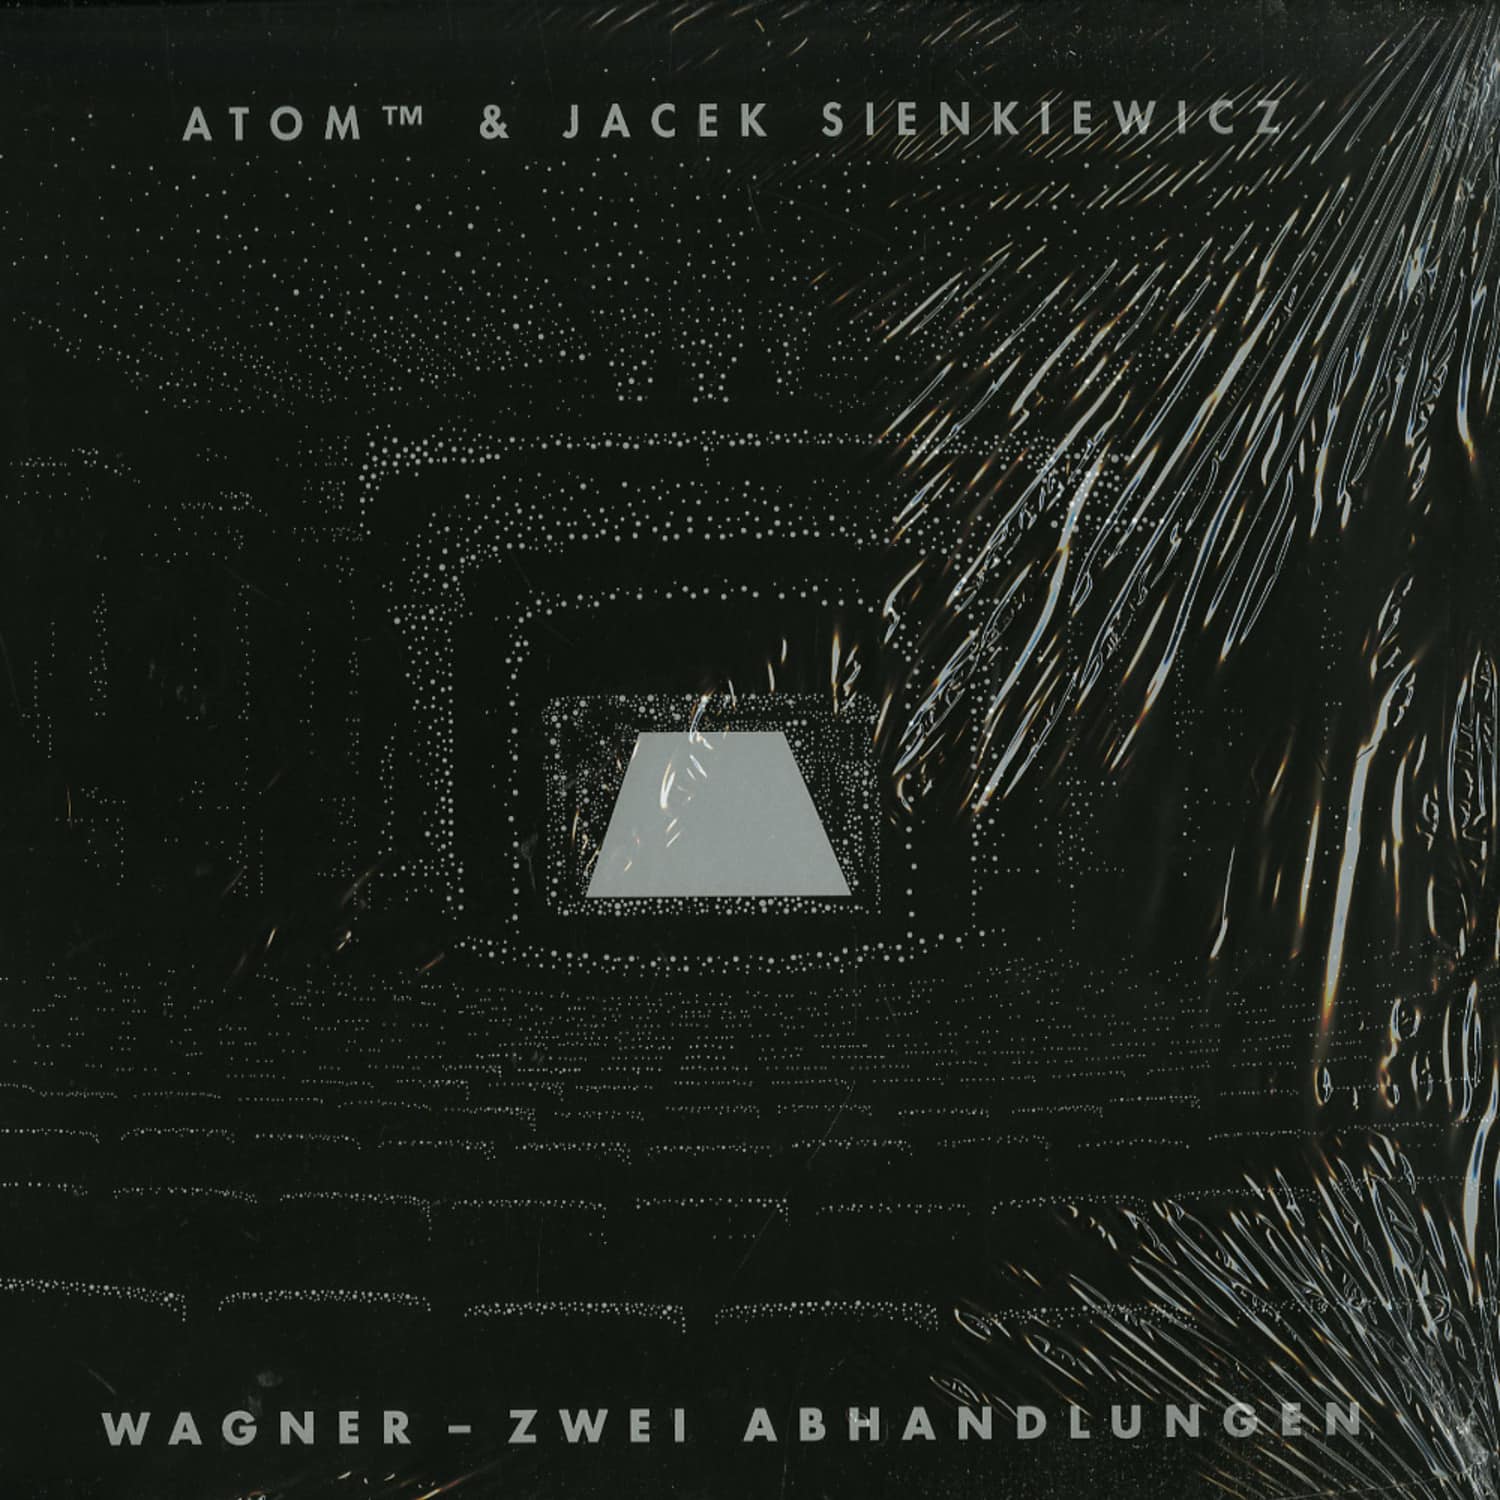 Atom Tm & Jacek Sienkiewicz - WAGNER - ZWEI ABHANDLUNGEN